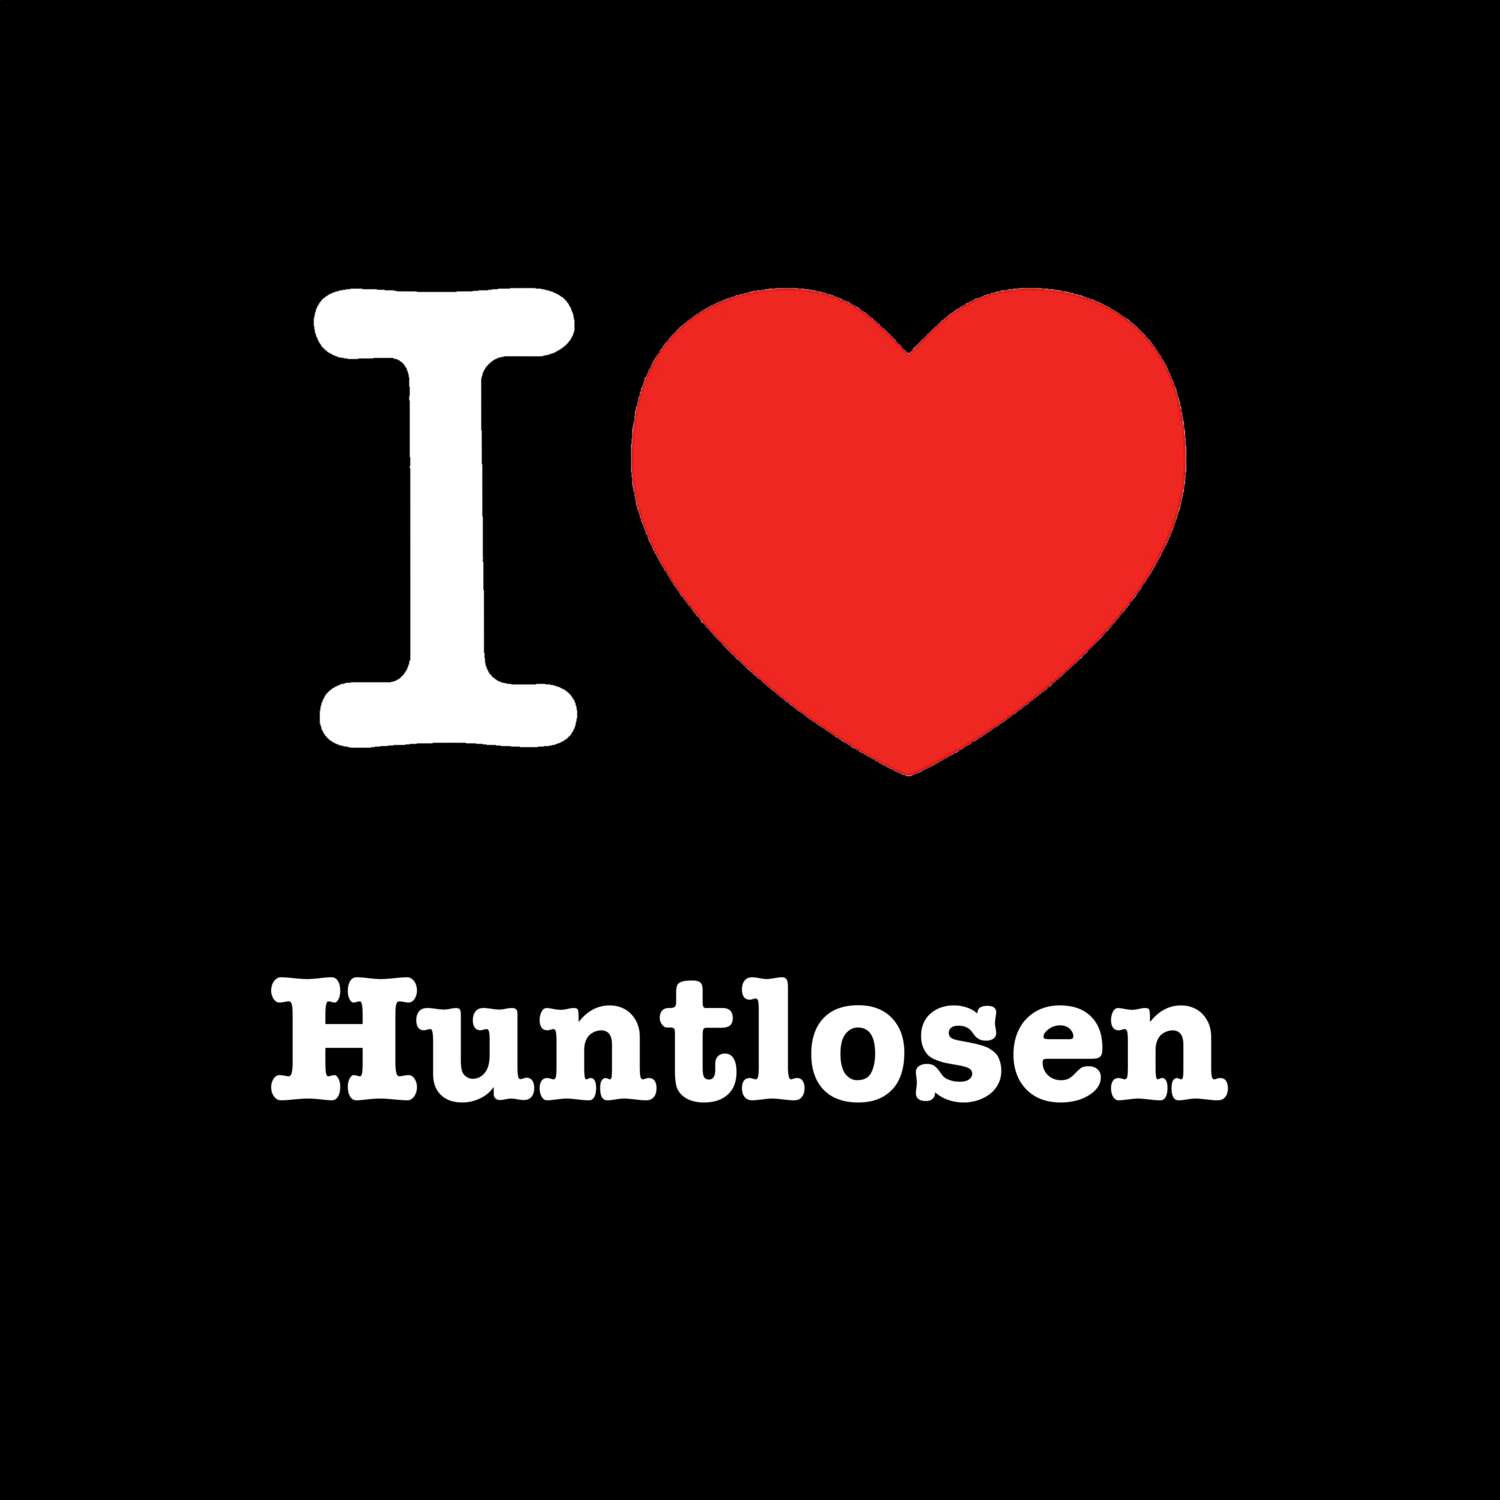 Huntlosen T-Shirt »I love«